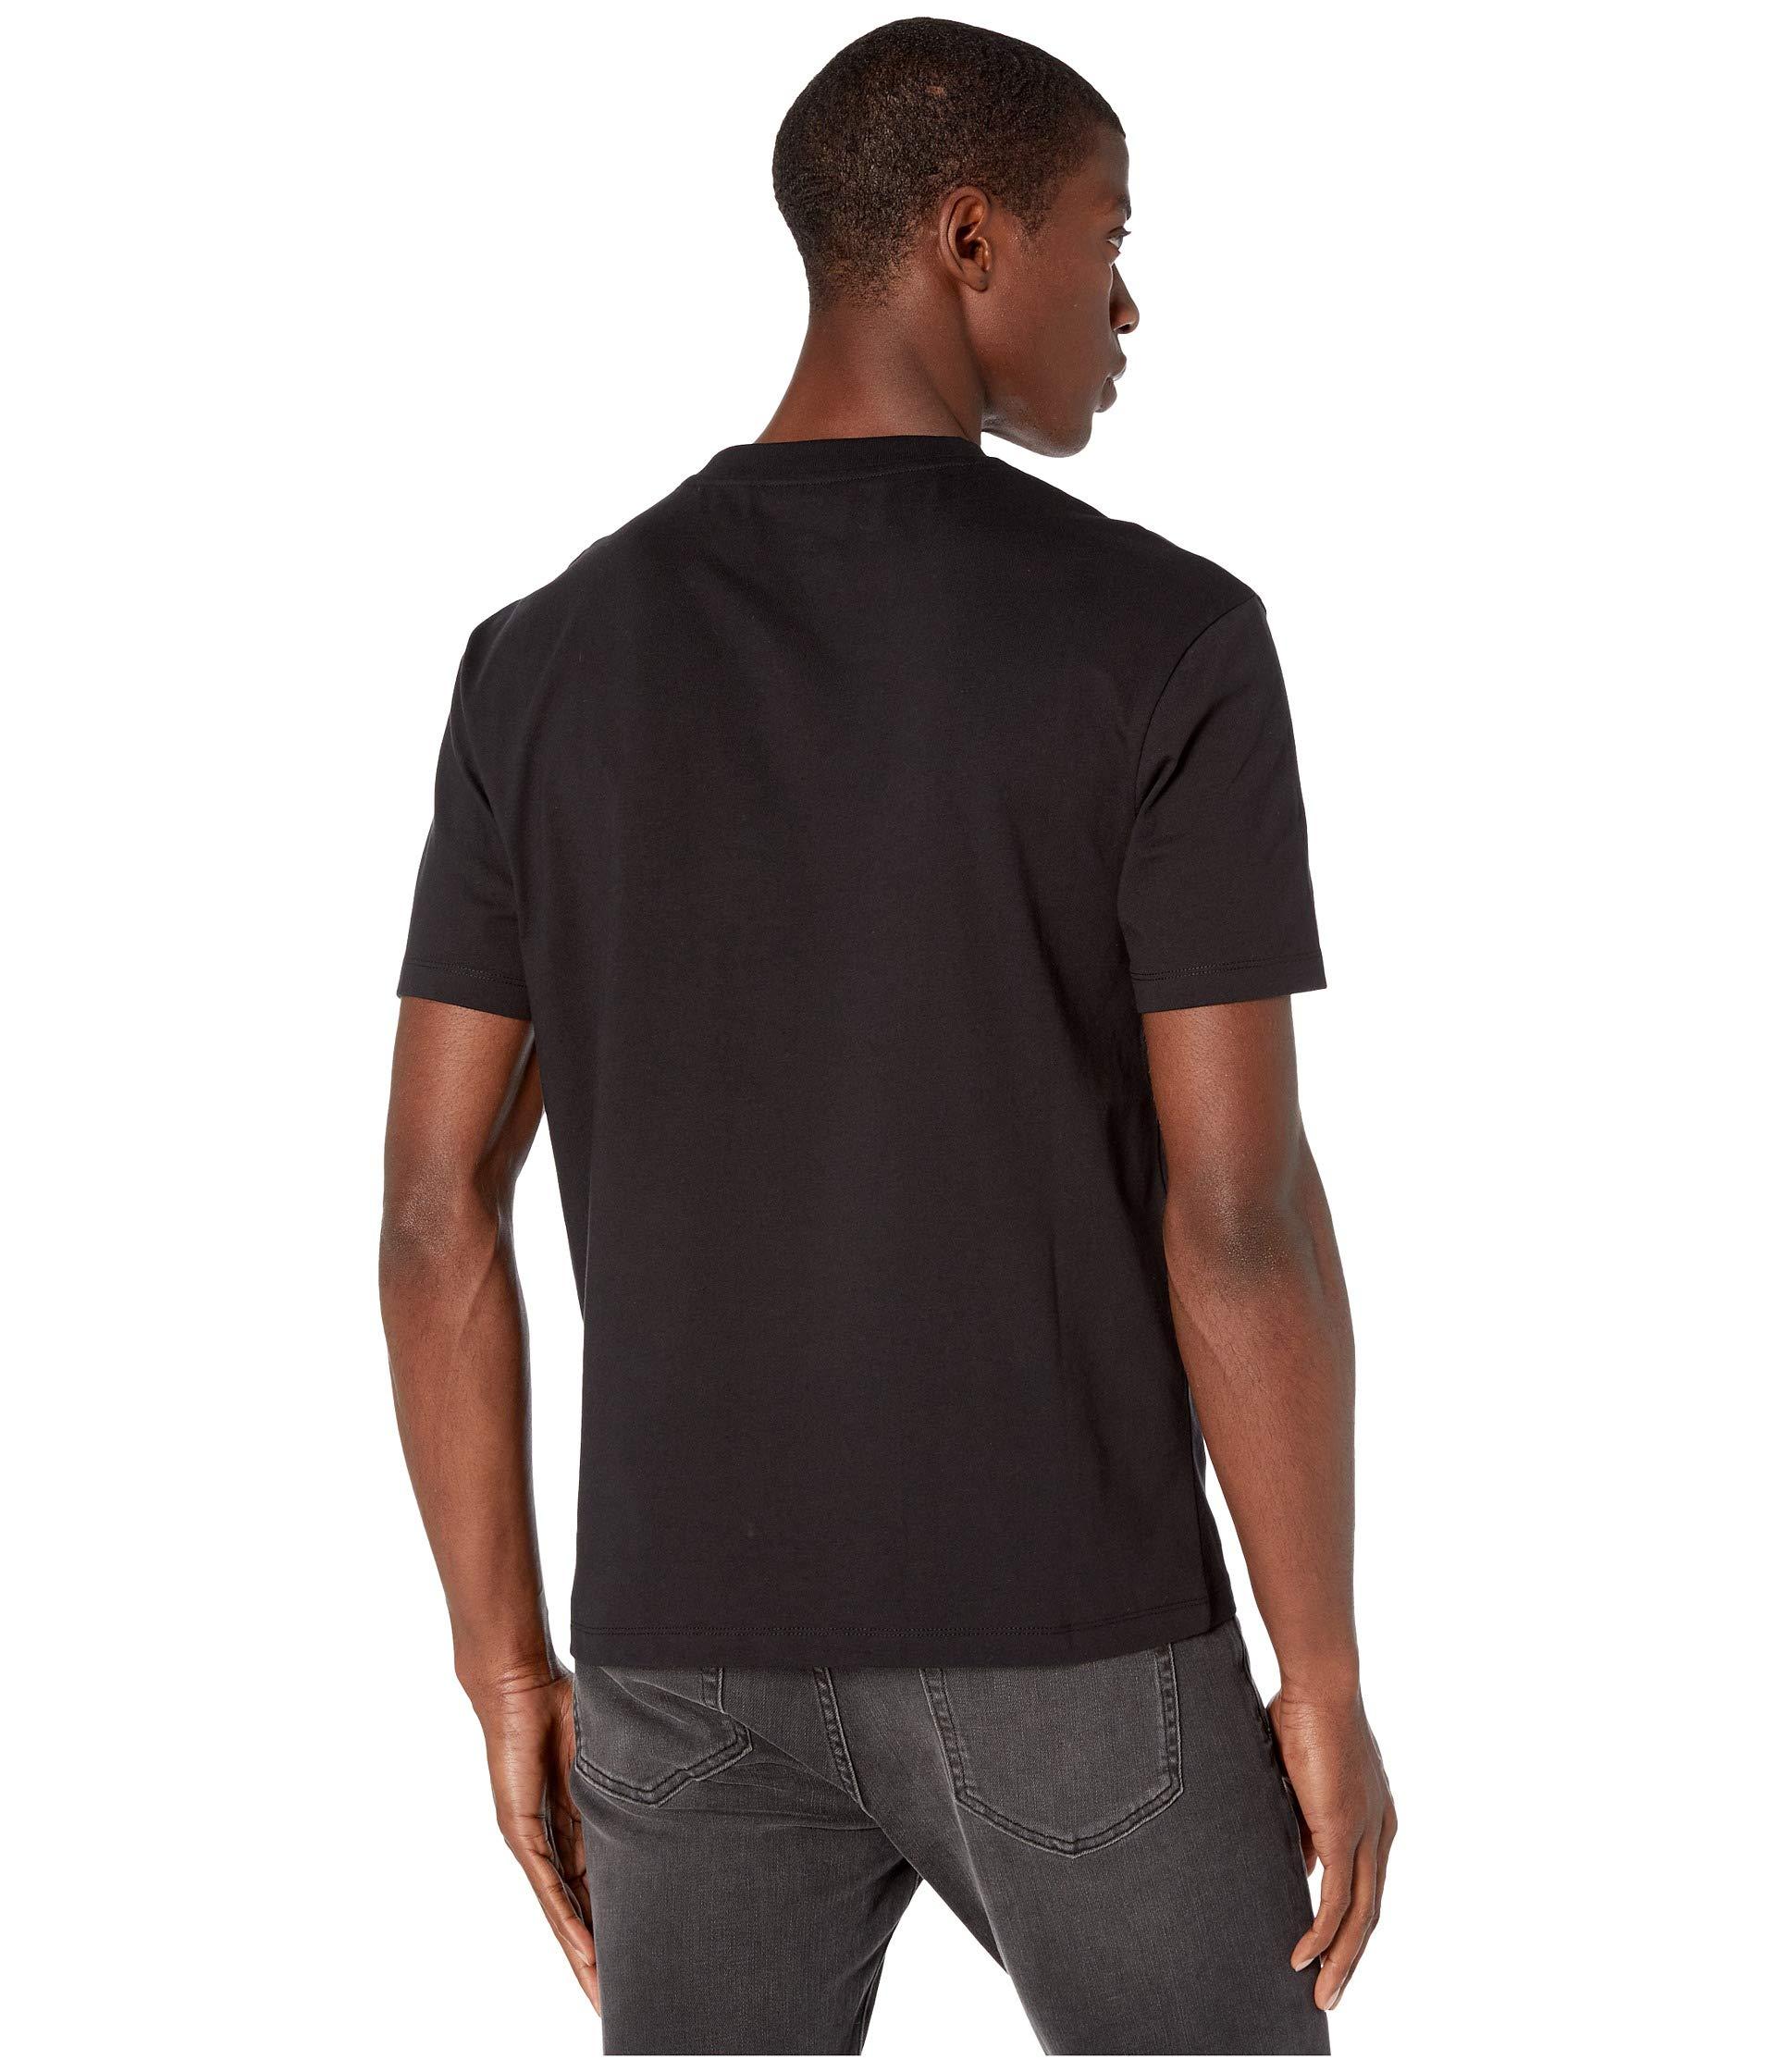 McQ Cotton Dropped Shoulder Logo T-shirt in Black for Men - Lyst